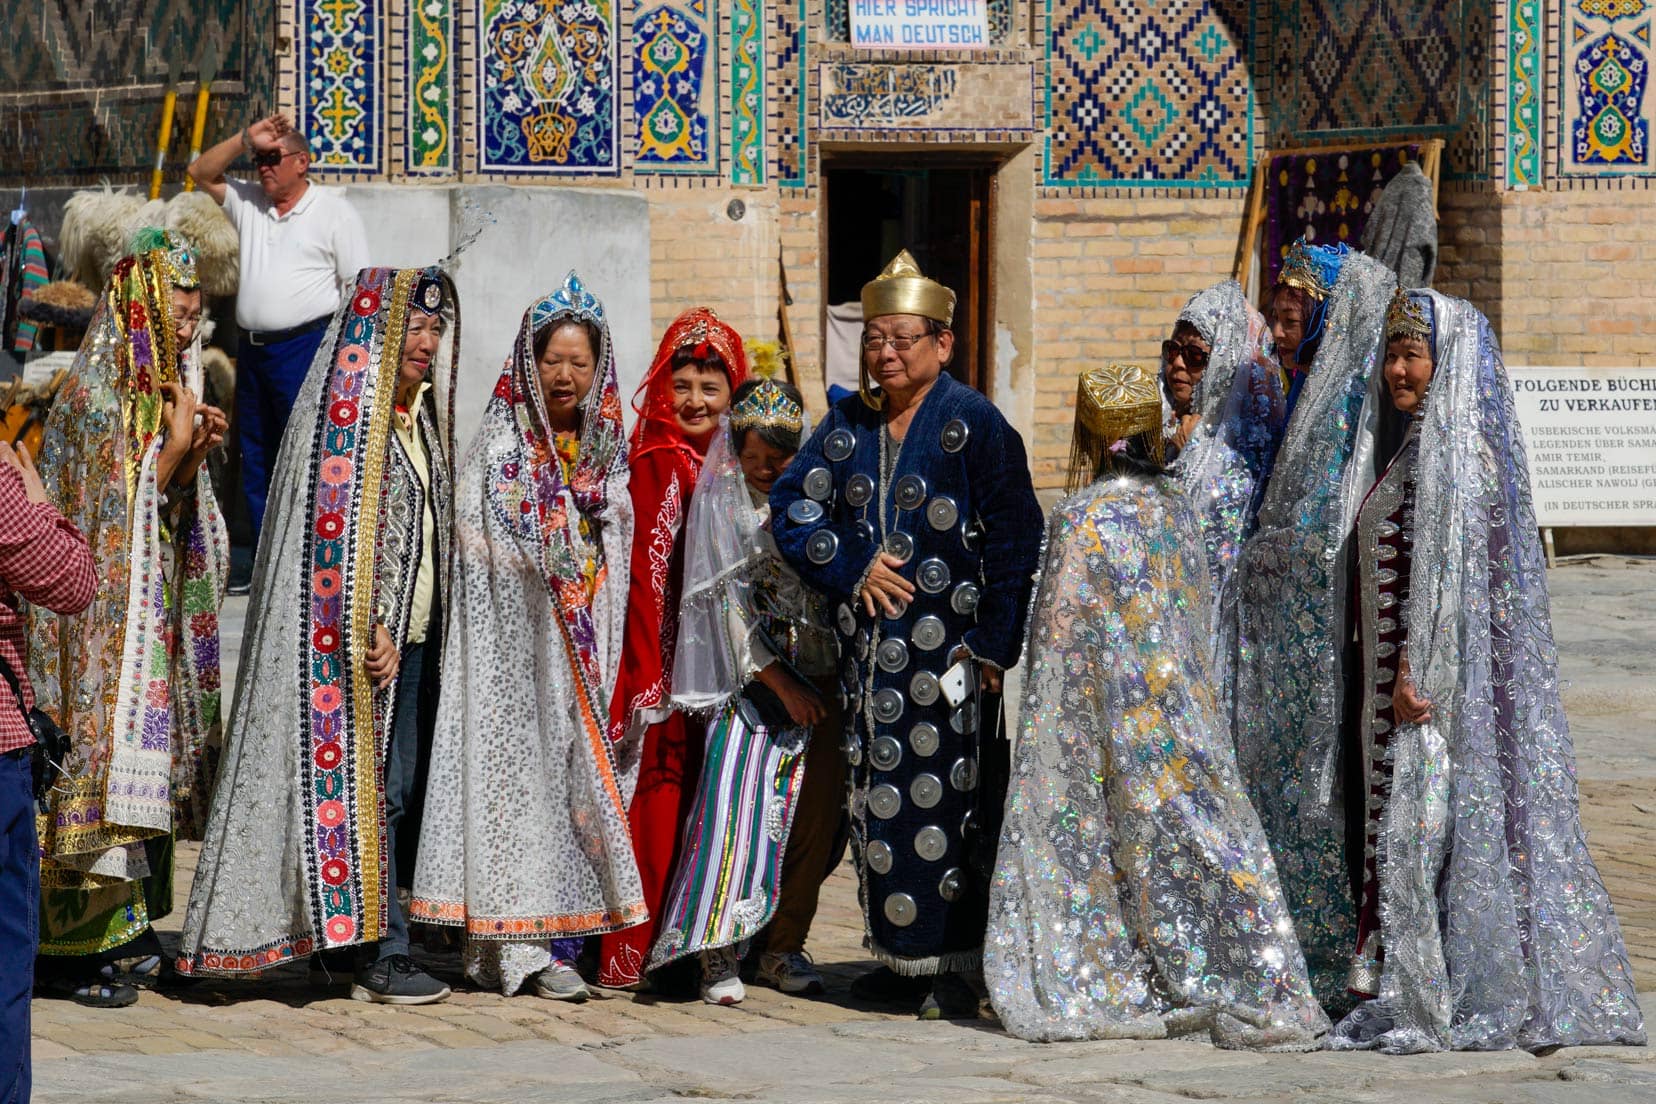 Sher-Dor-Uzbek-dress-up-costumes,-Registan-Square,-Samarkand